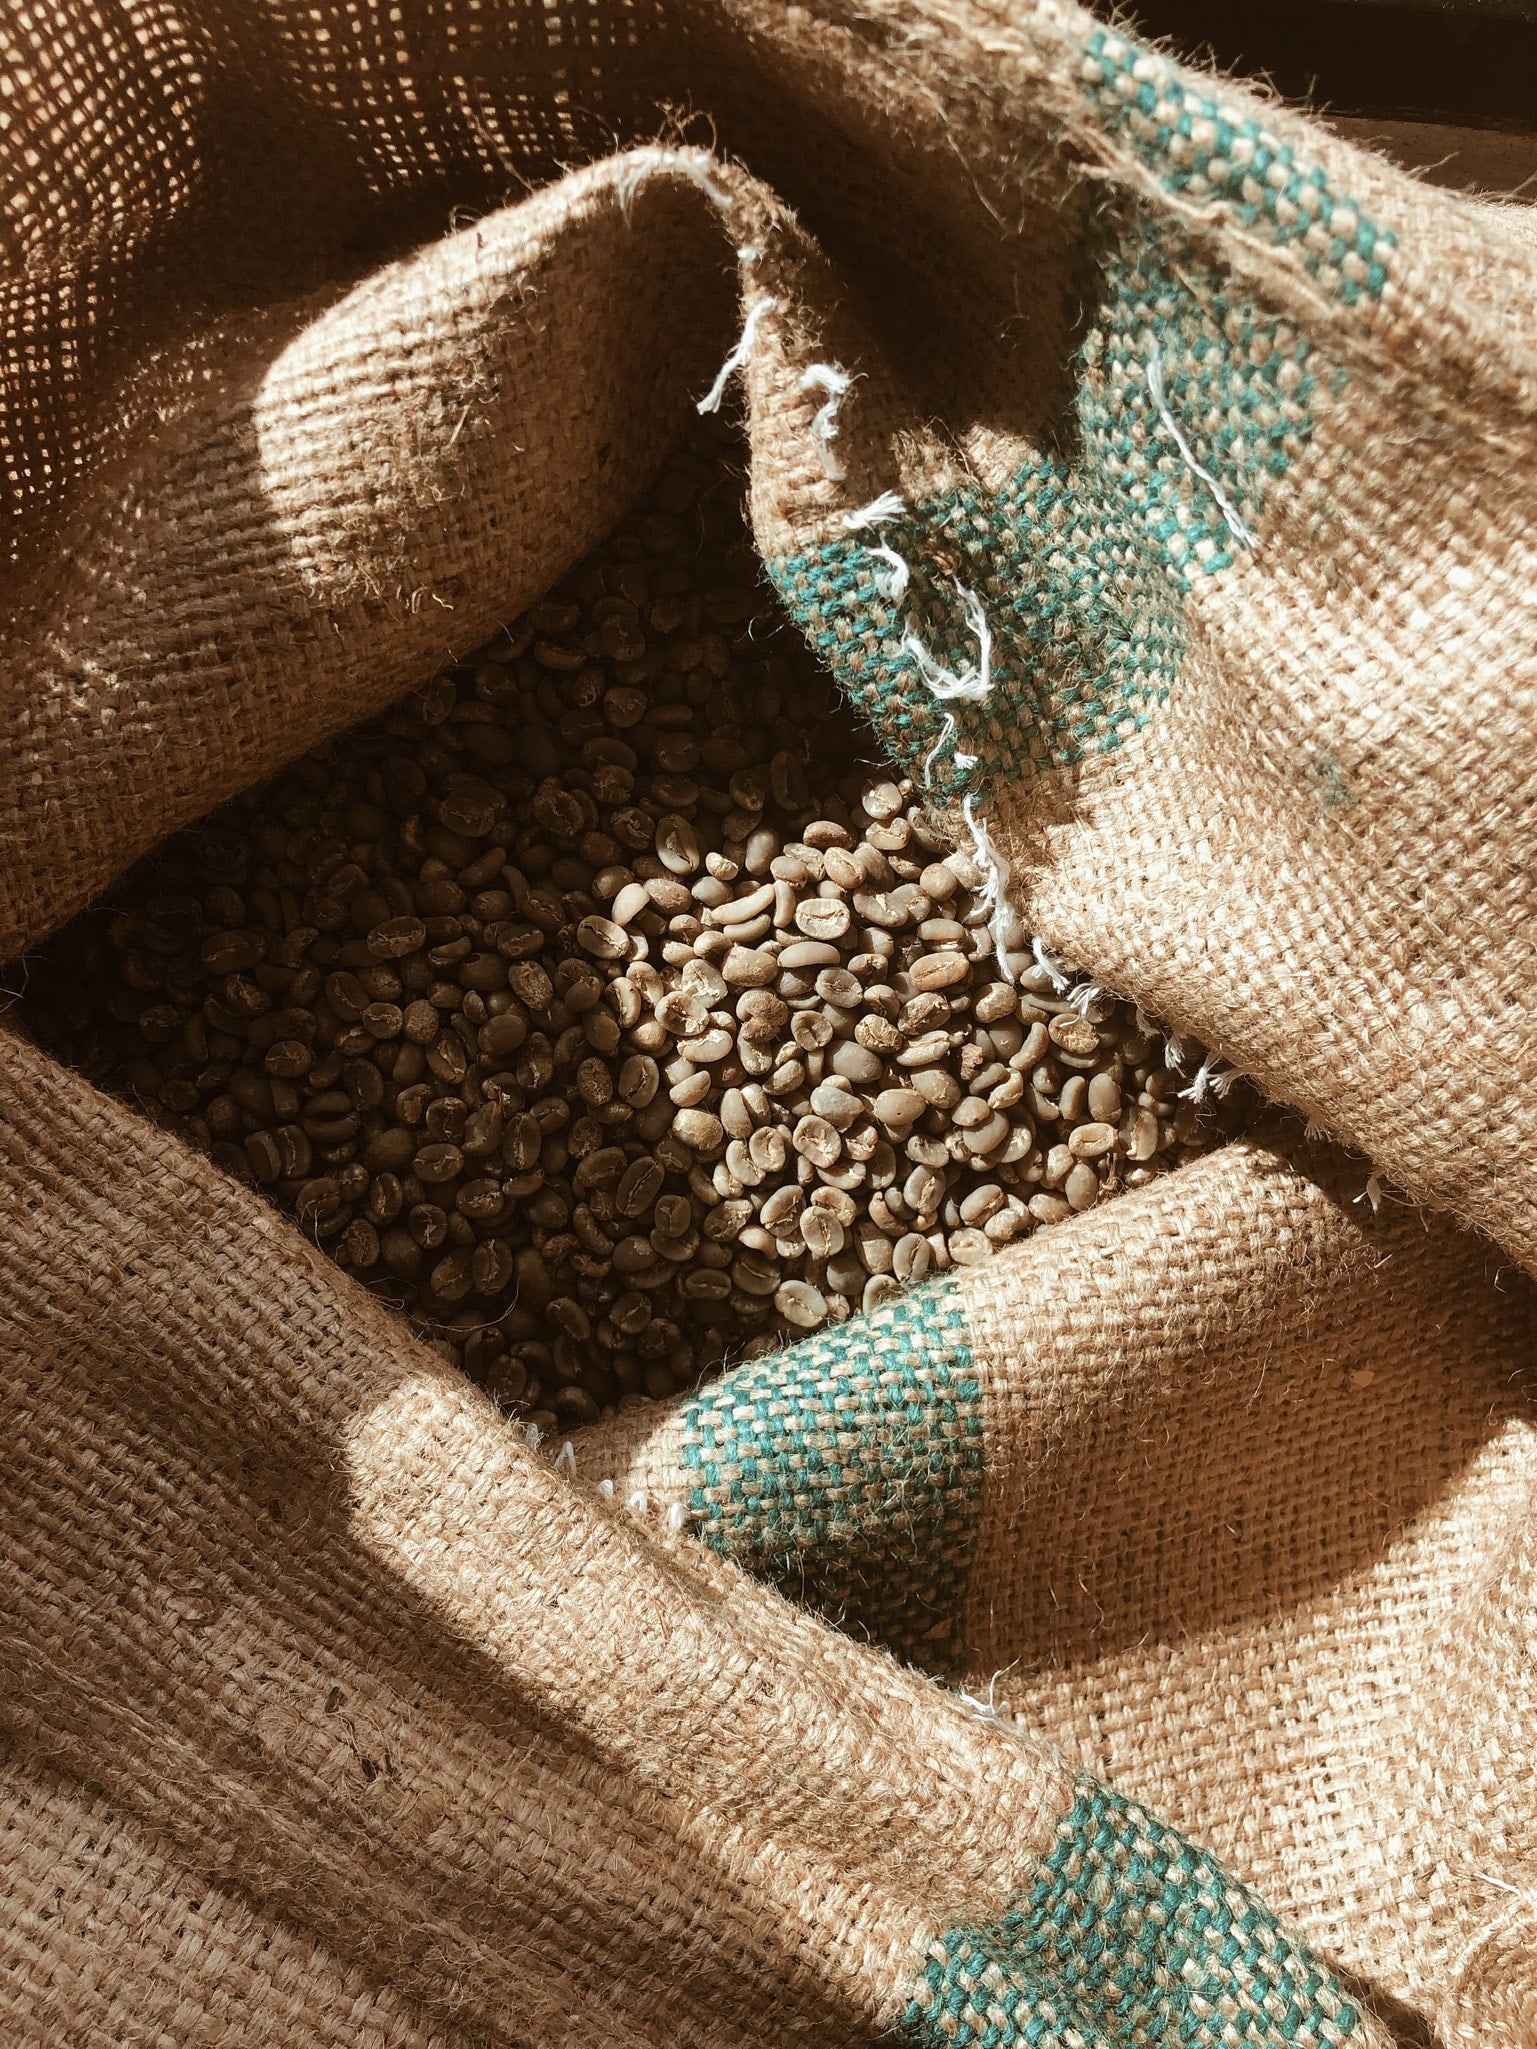 Counter Culture coffee: Shilicho, Sidama, Ethiopia – Clover Food Lab